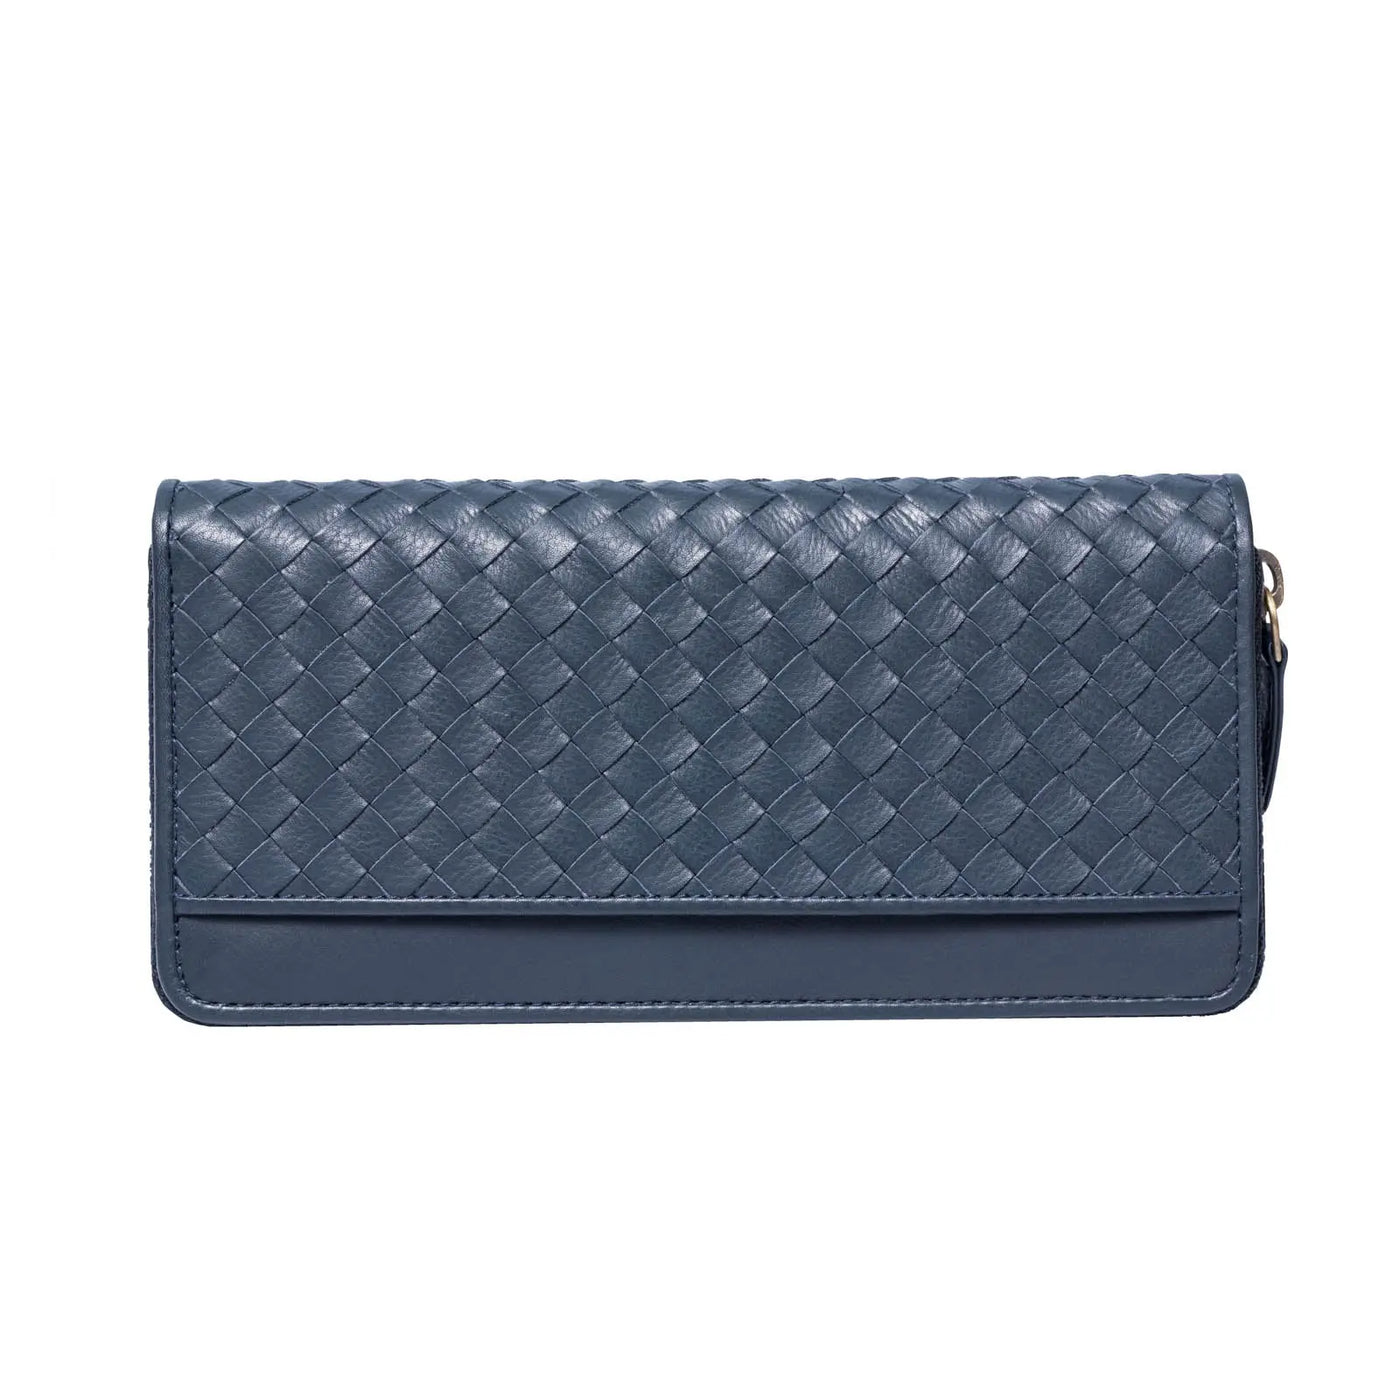 Caroline supple leather wallet